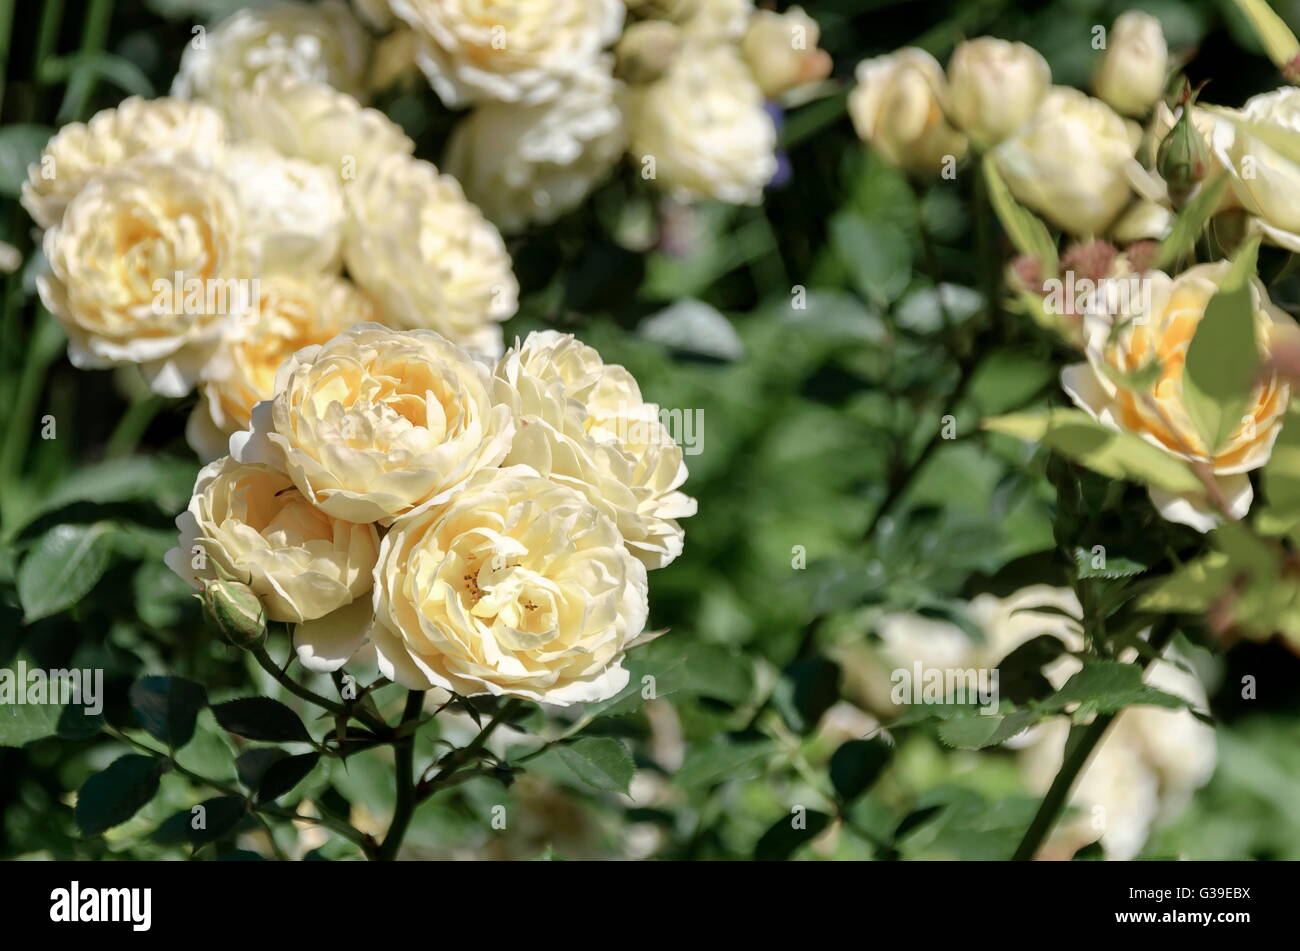 Yellow rose bush in bloom at natural outdoor garden, Sofia, Bulgaria Stock Photo